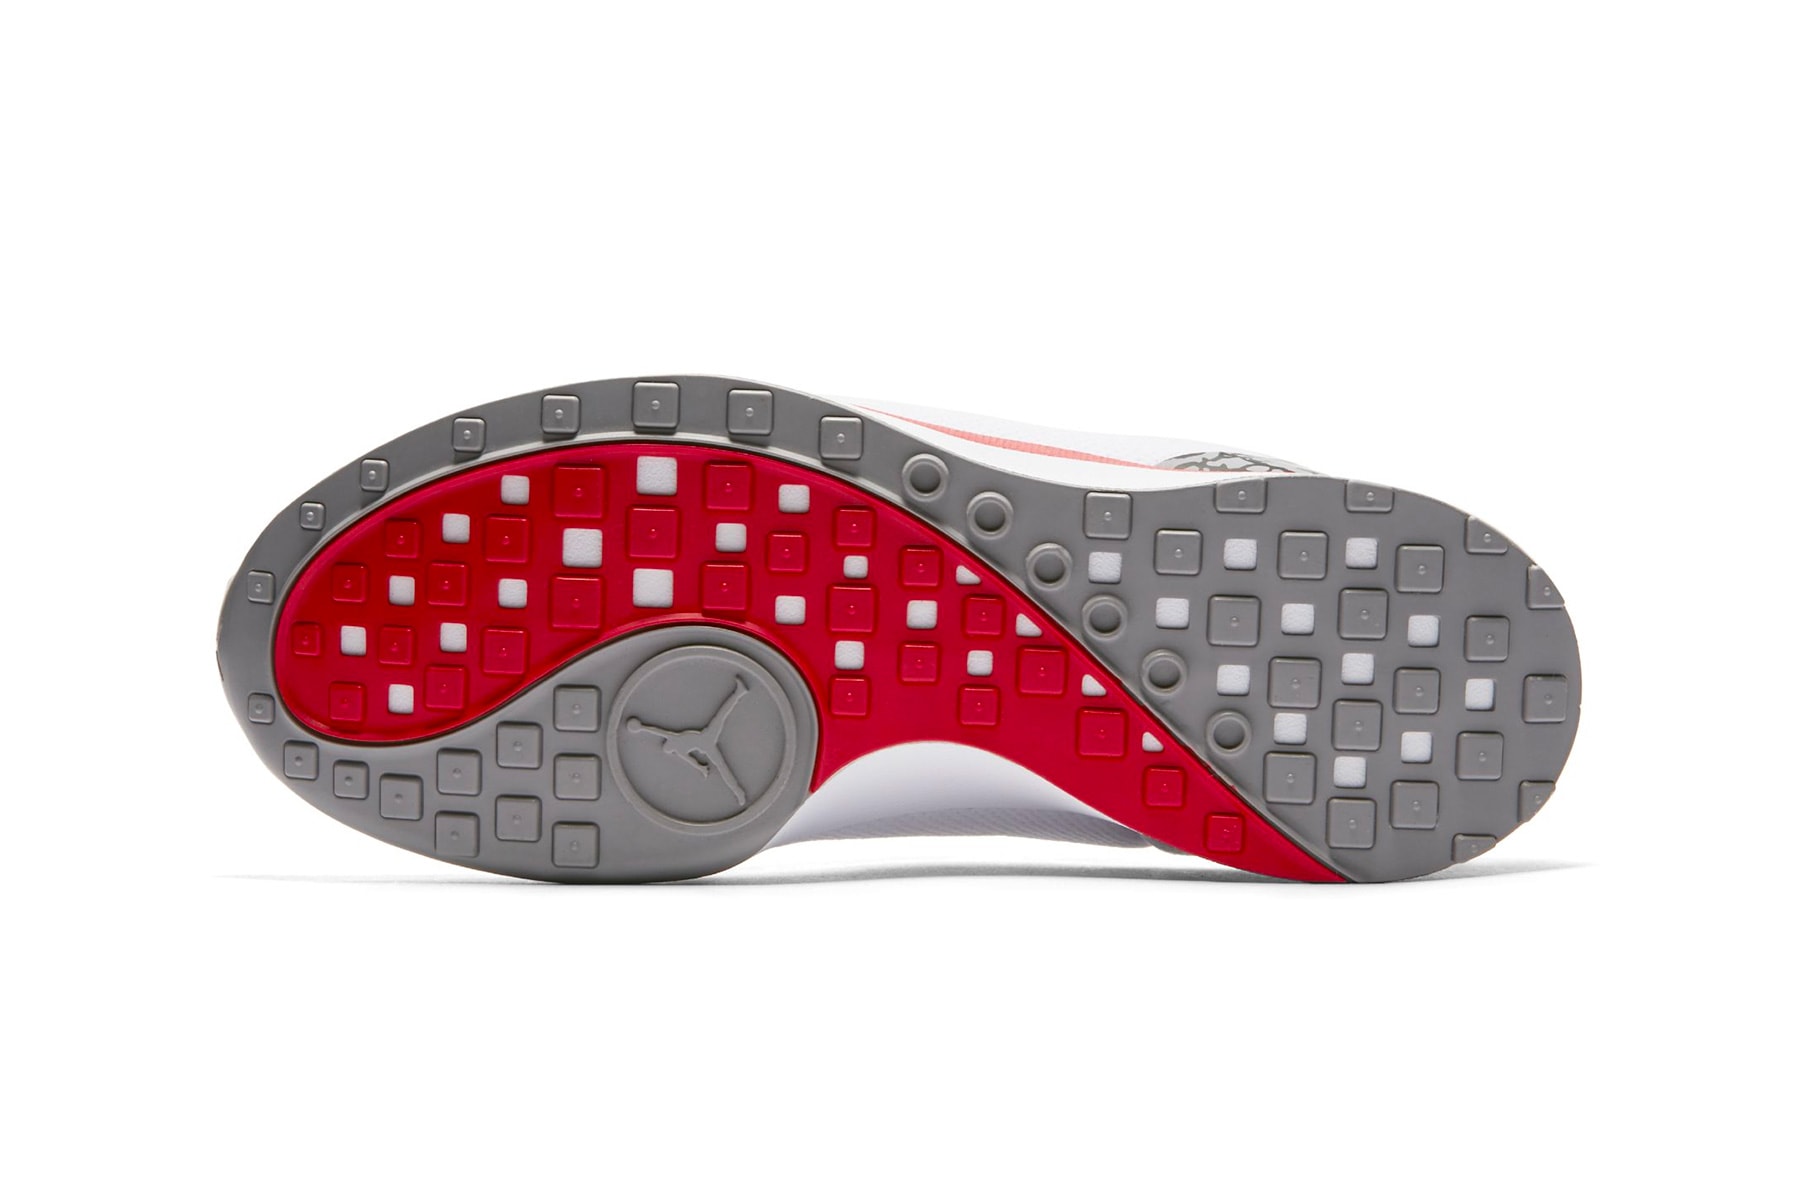 Jordan Zoom Tenacity 88 "Katrina" First Look "Fire Red" release date price Jordan Brand Nike sneaker running